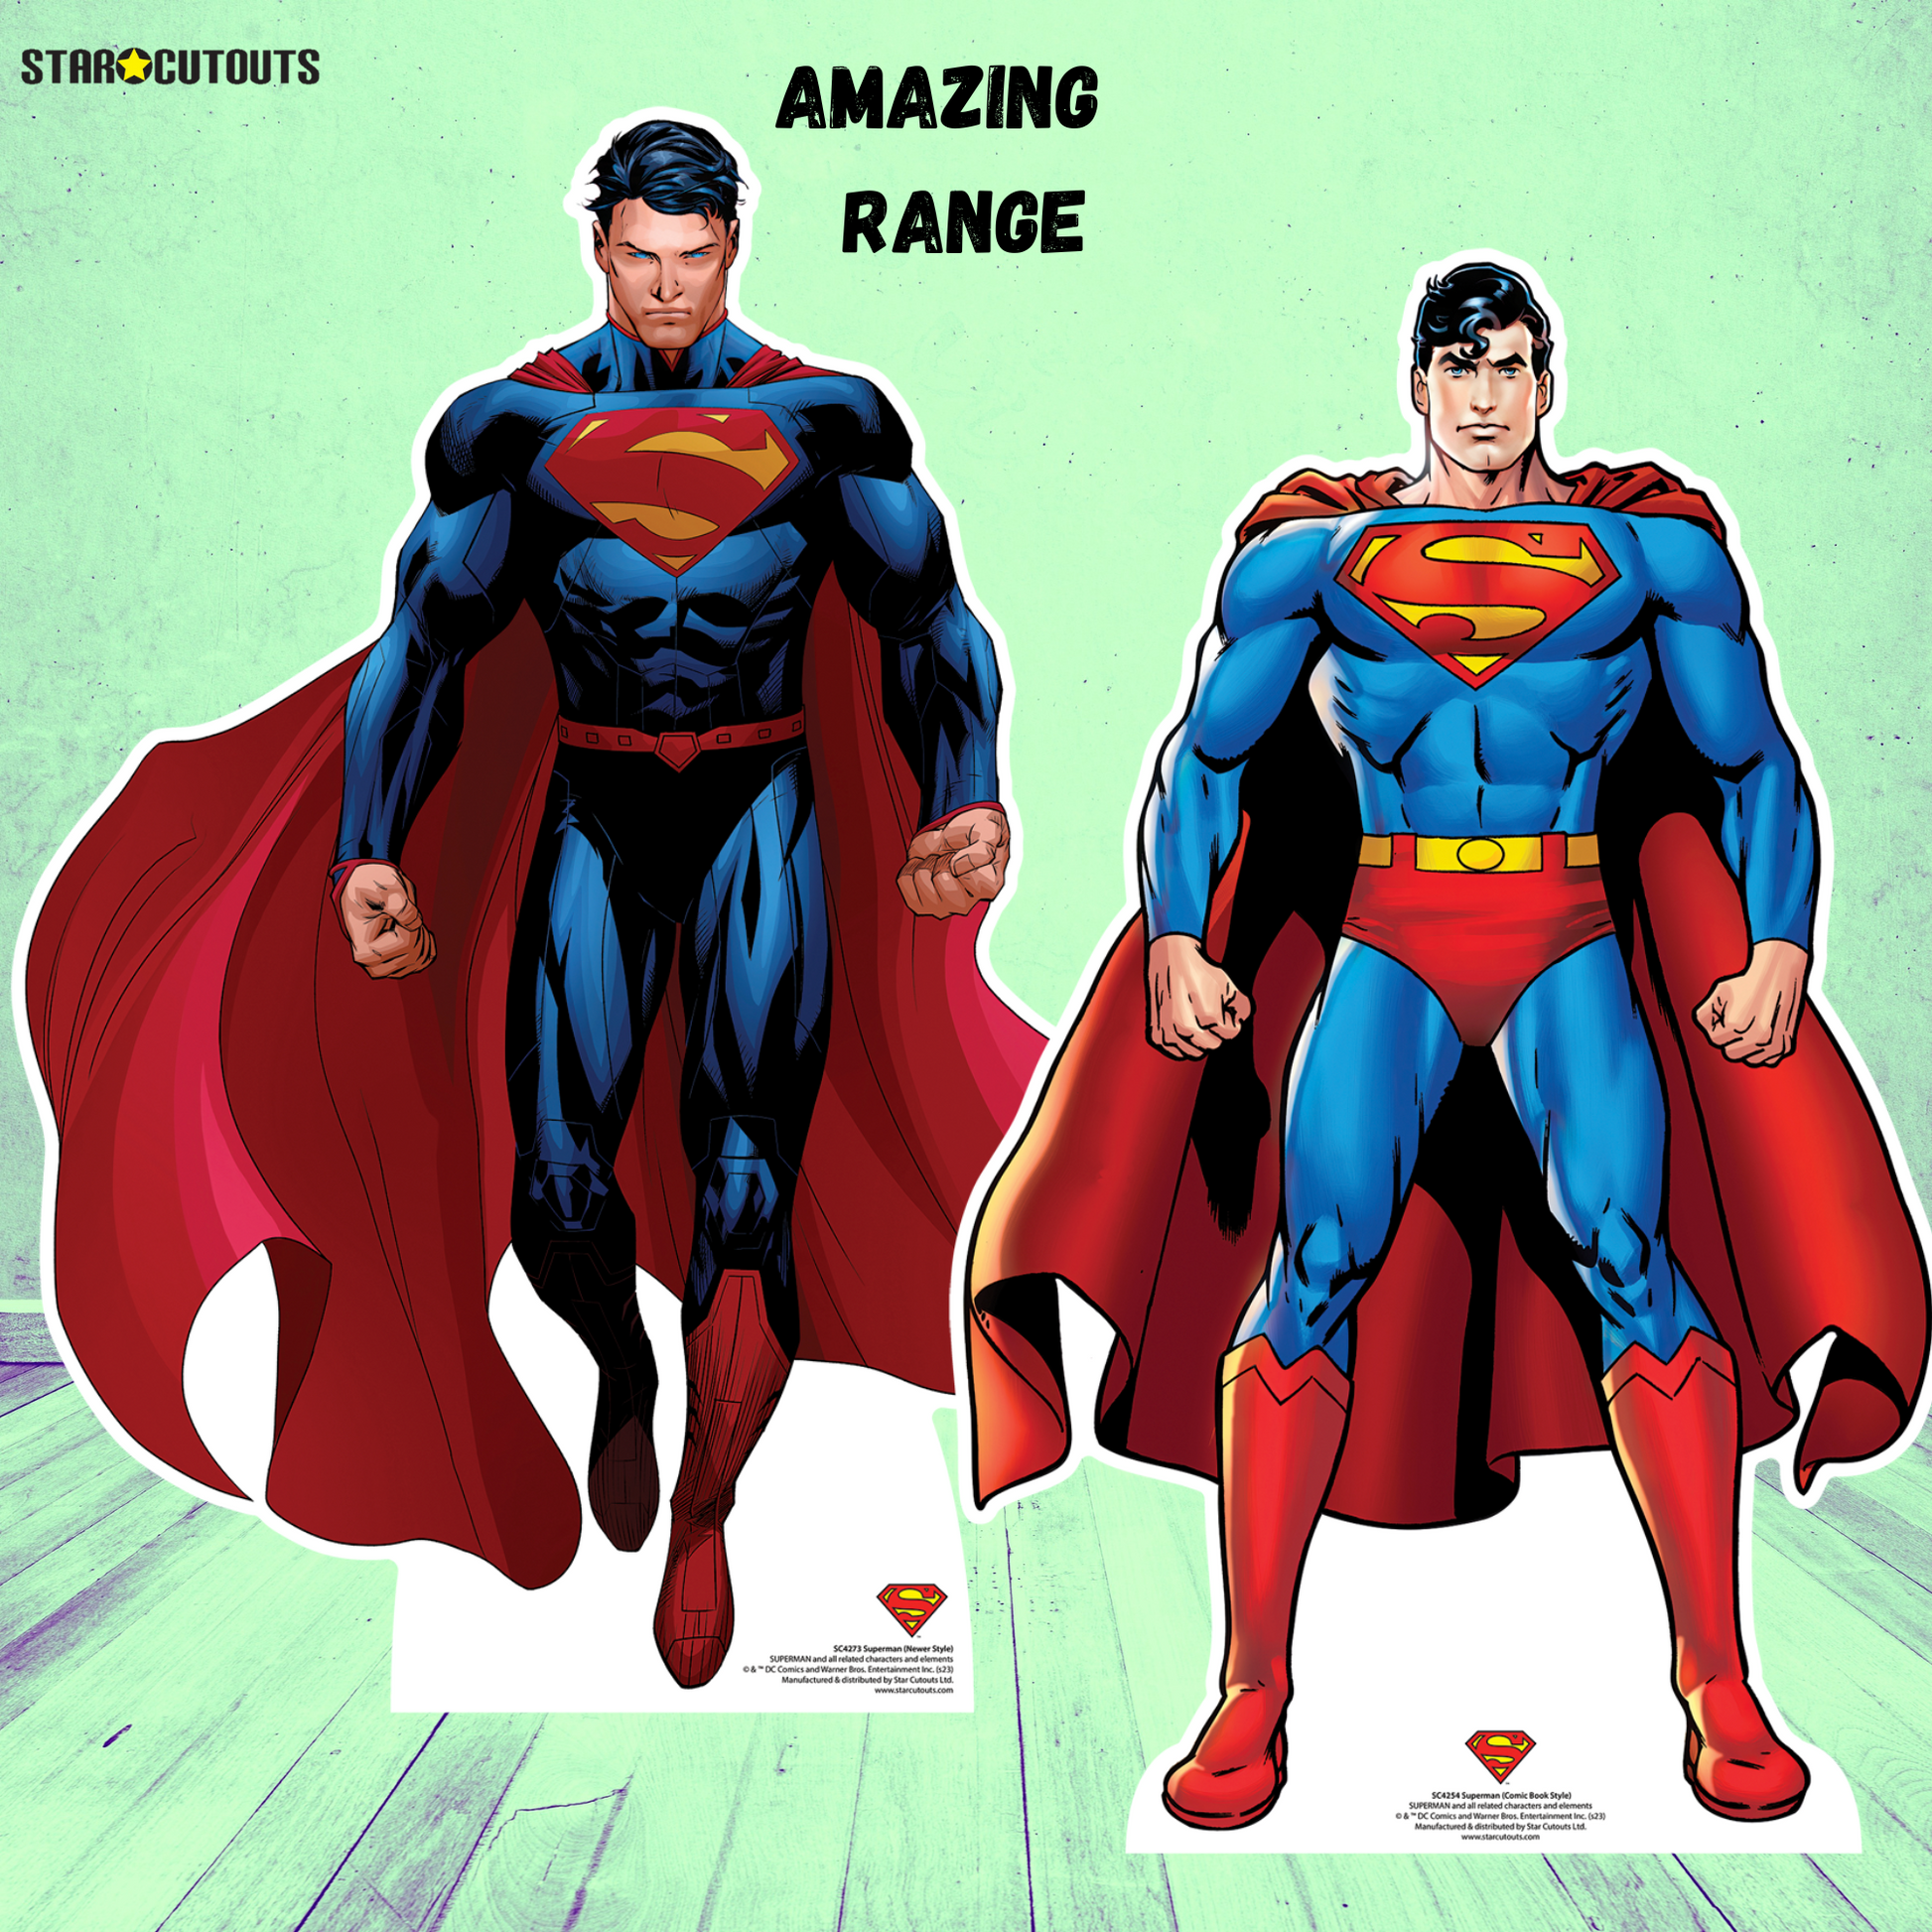 Superman Comic Style Cardboard Cutout